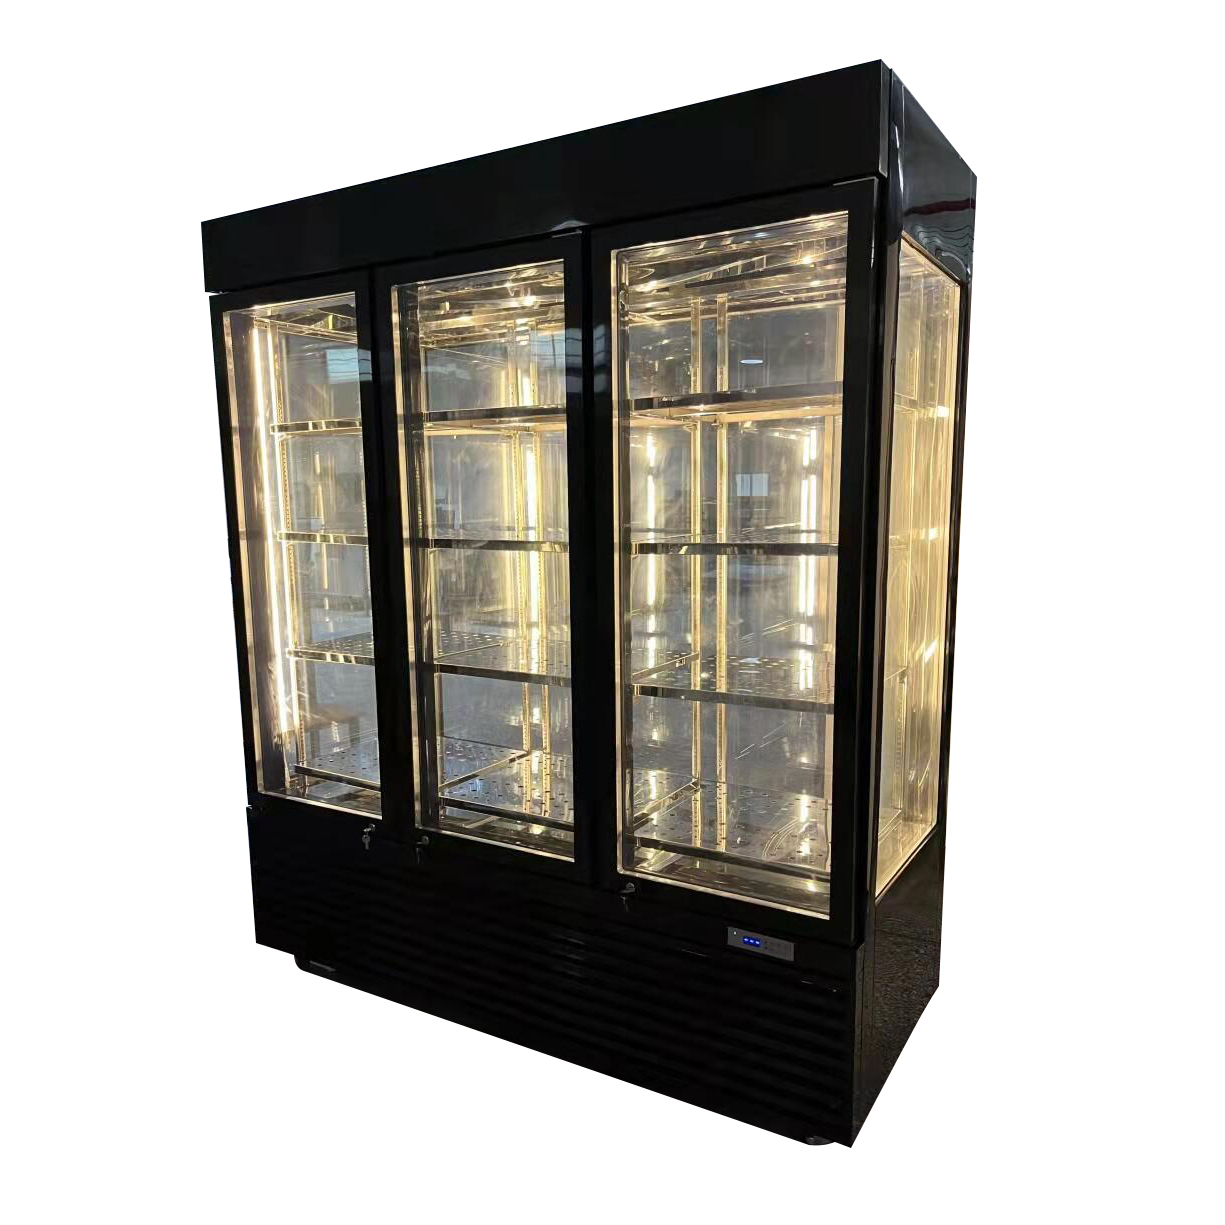 Commercial Dry-aged Cooler Refrigerator Freezer Fridge for Meat